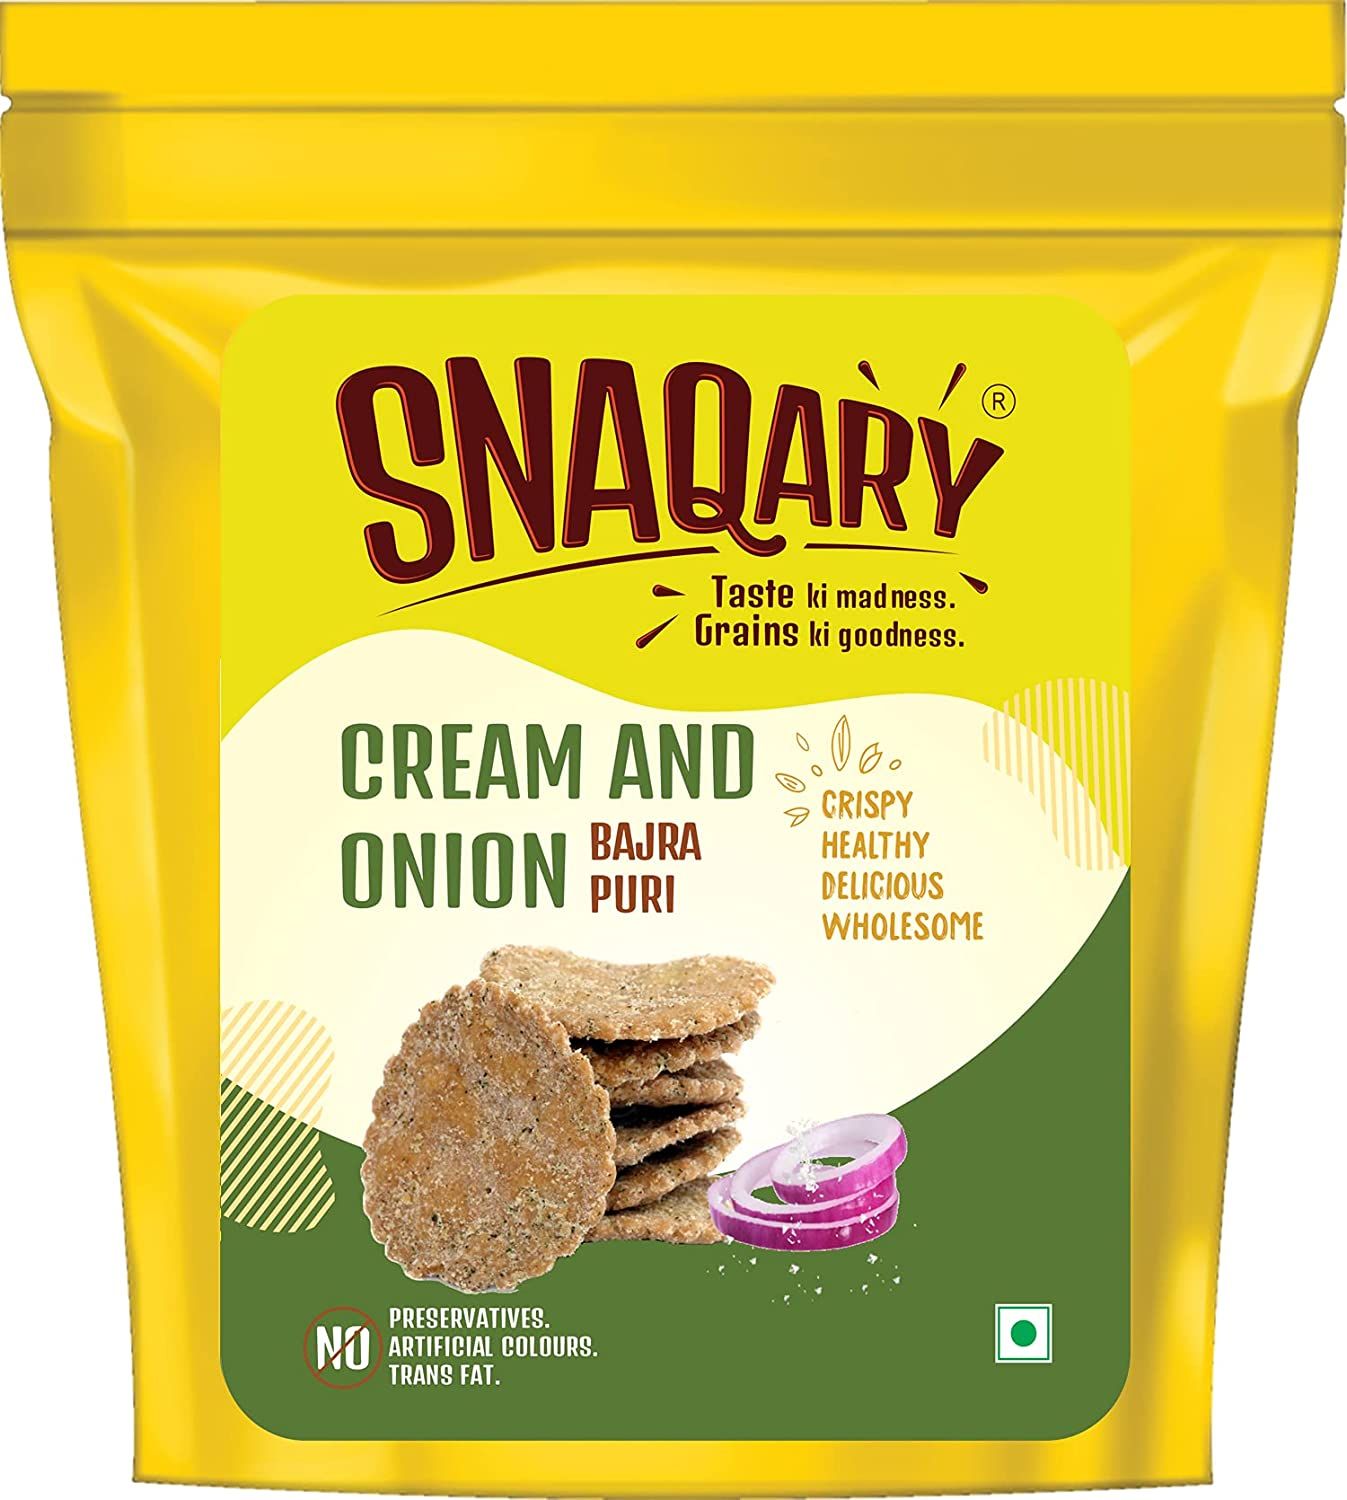 Snaqary Cream & Onion Bajra Puri Image